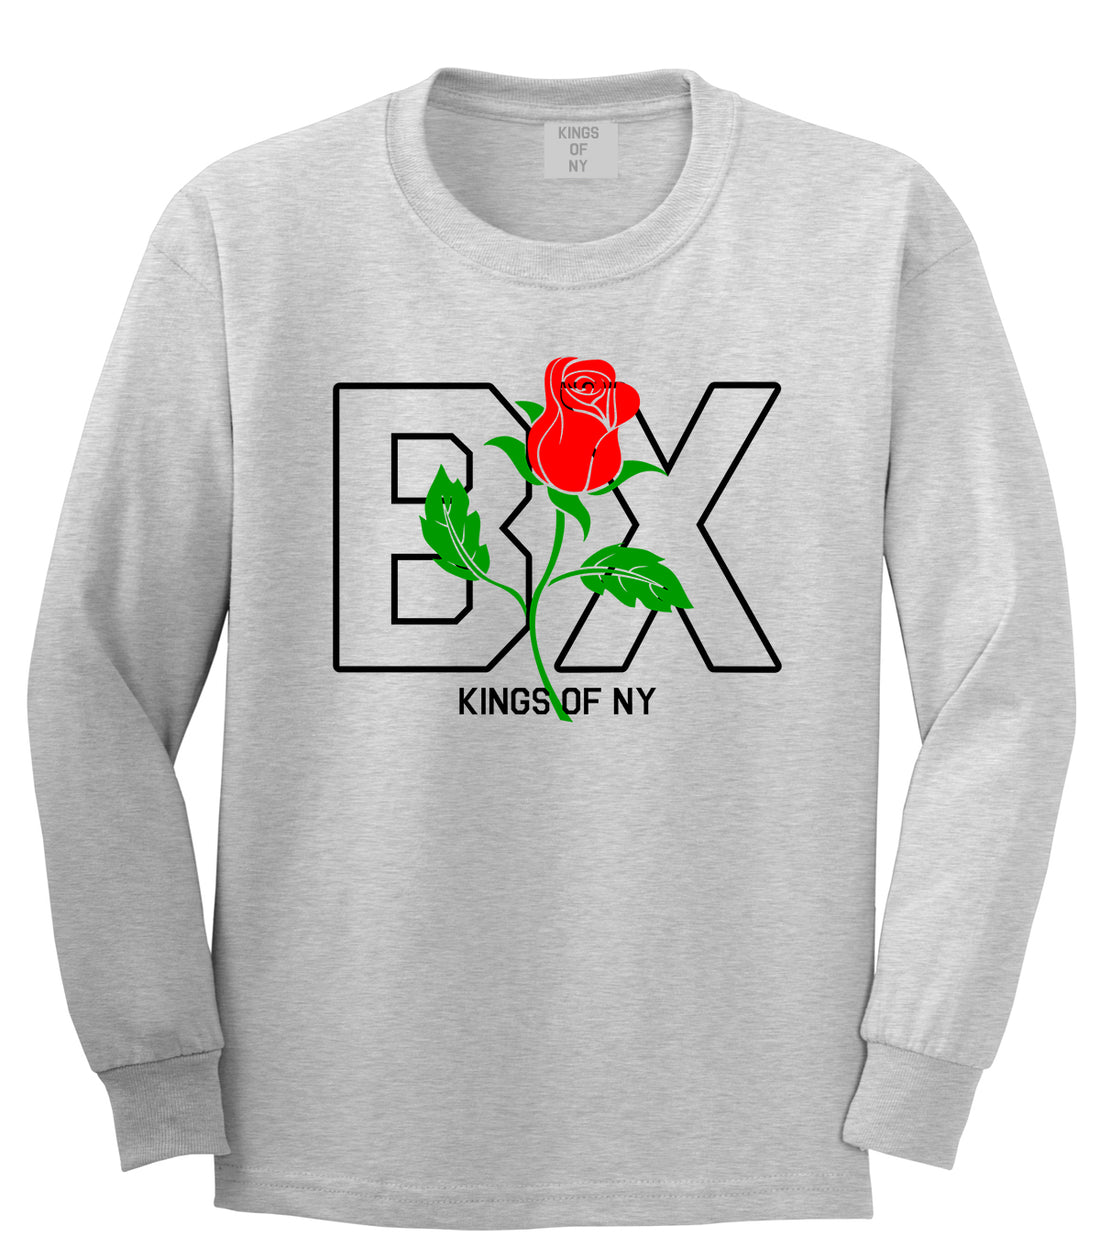 Rose BX The Bronx Kings Of NY Mens Long Sleeve T-Shirt Grey